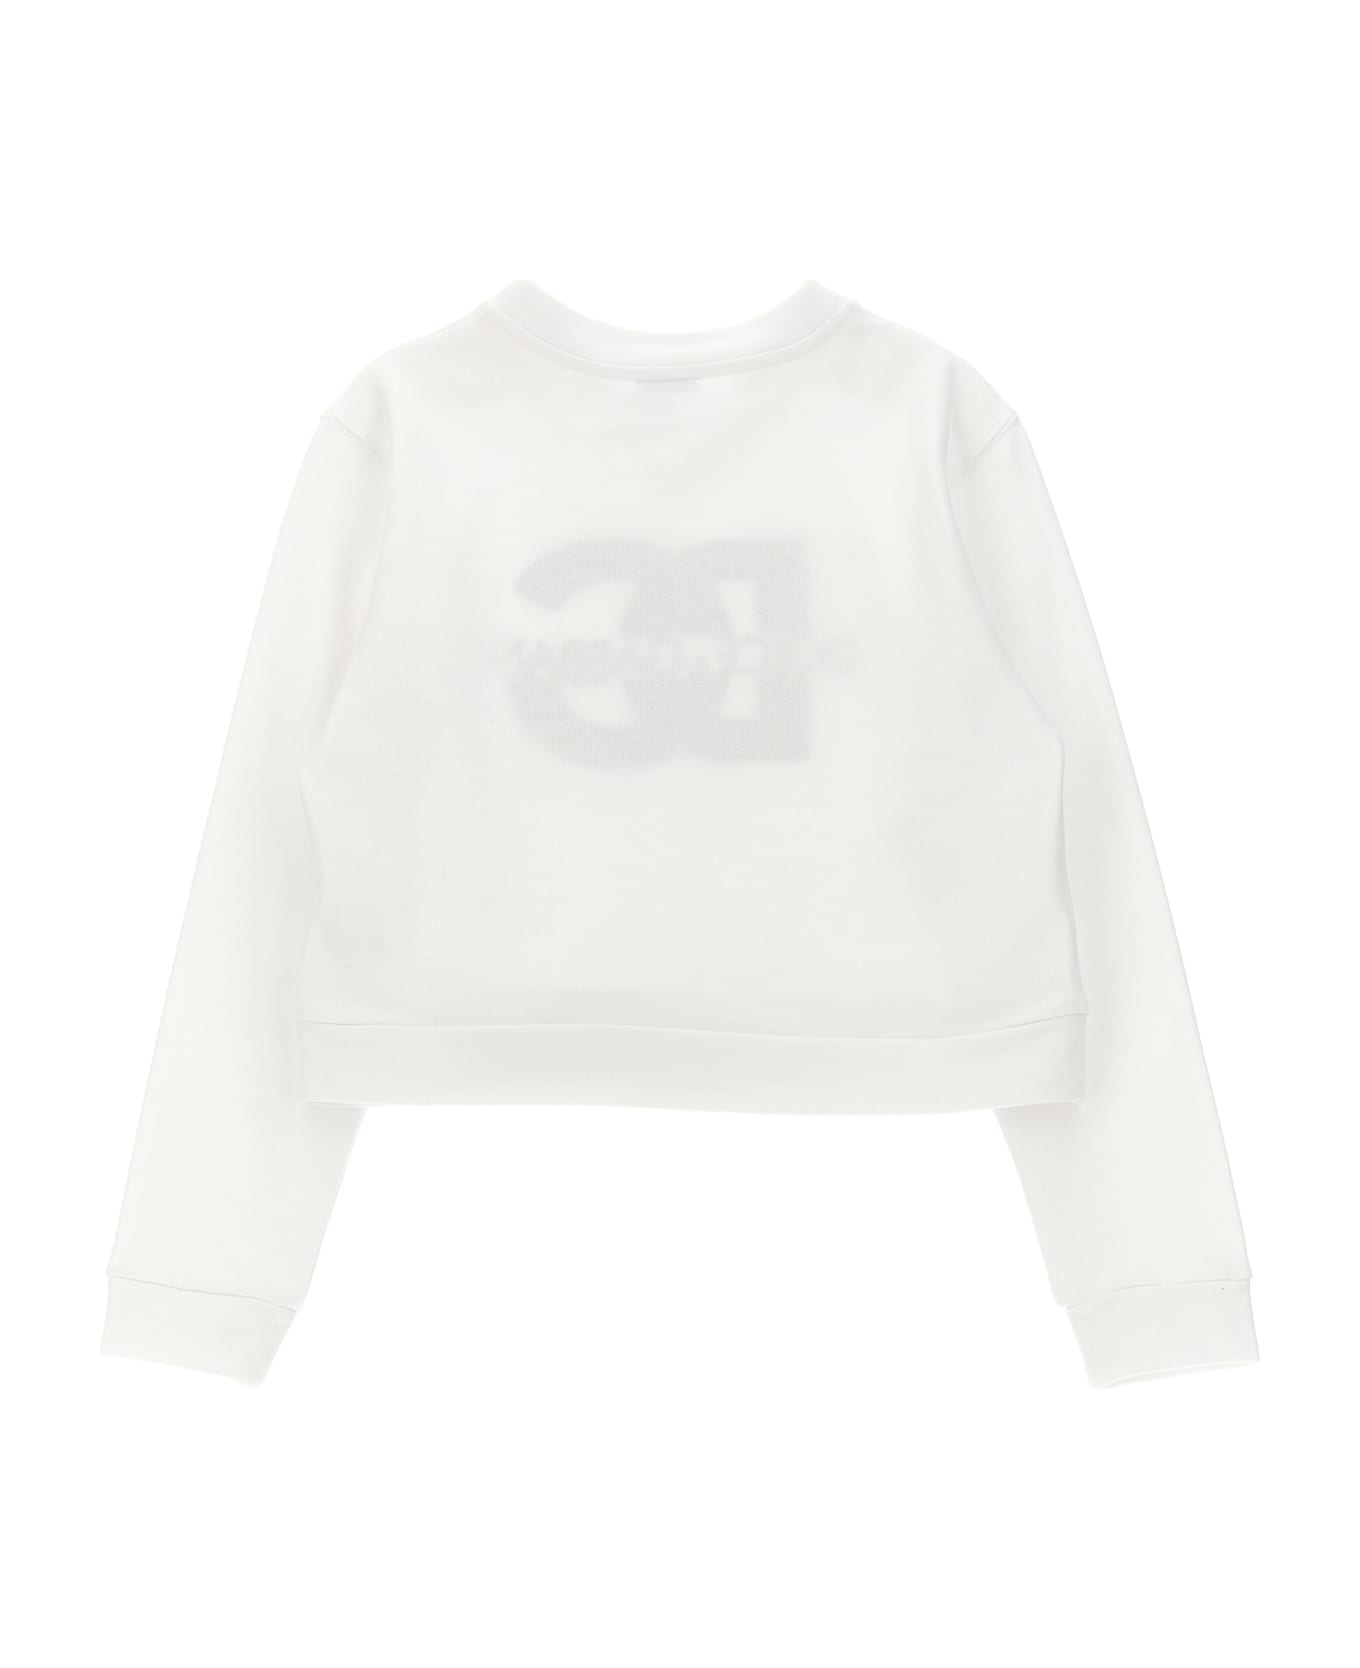 Dolce & Gabbana Logo Sweatshirt - White/Black